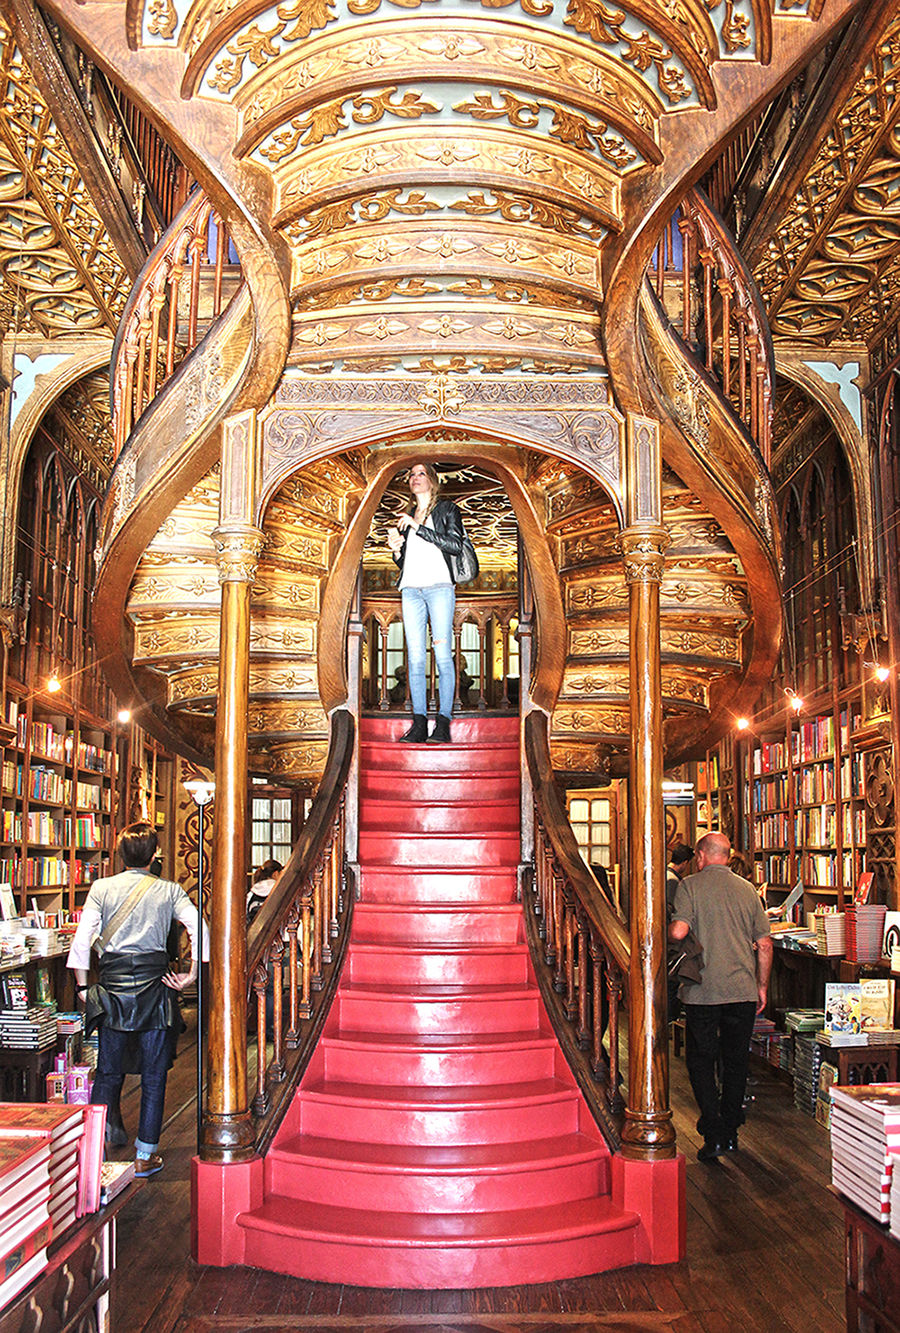 Livraria Lello in Porto - The most beautiful bookshops in Europe!